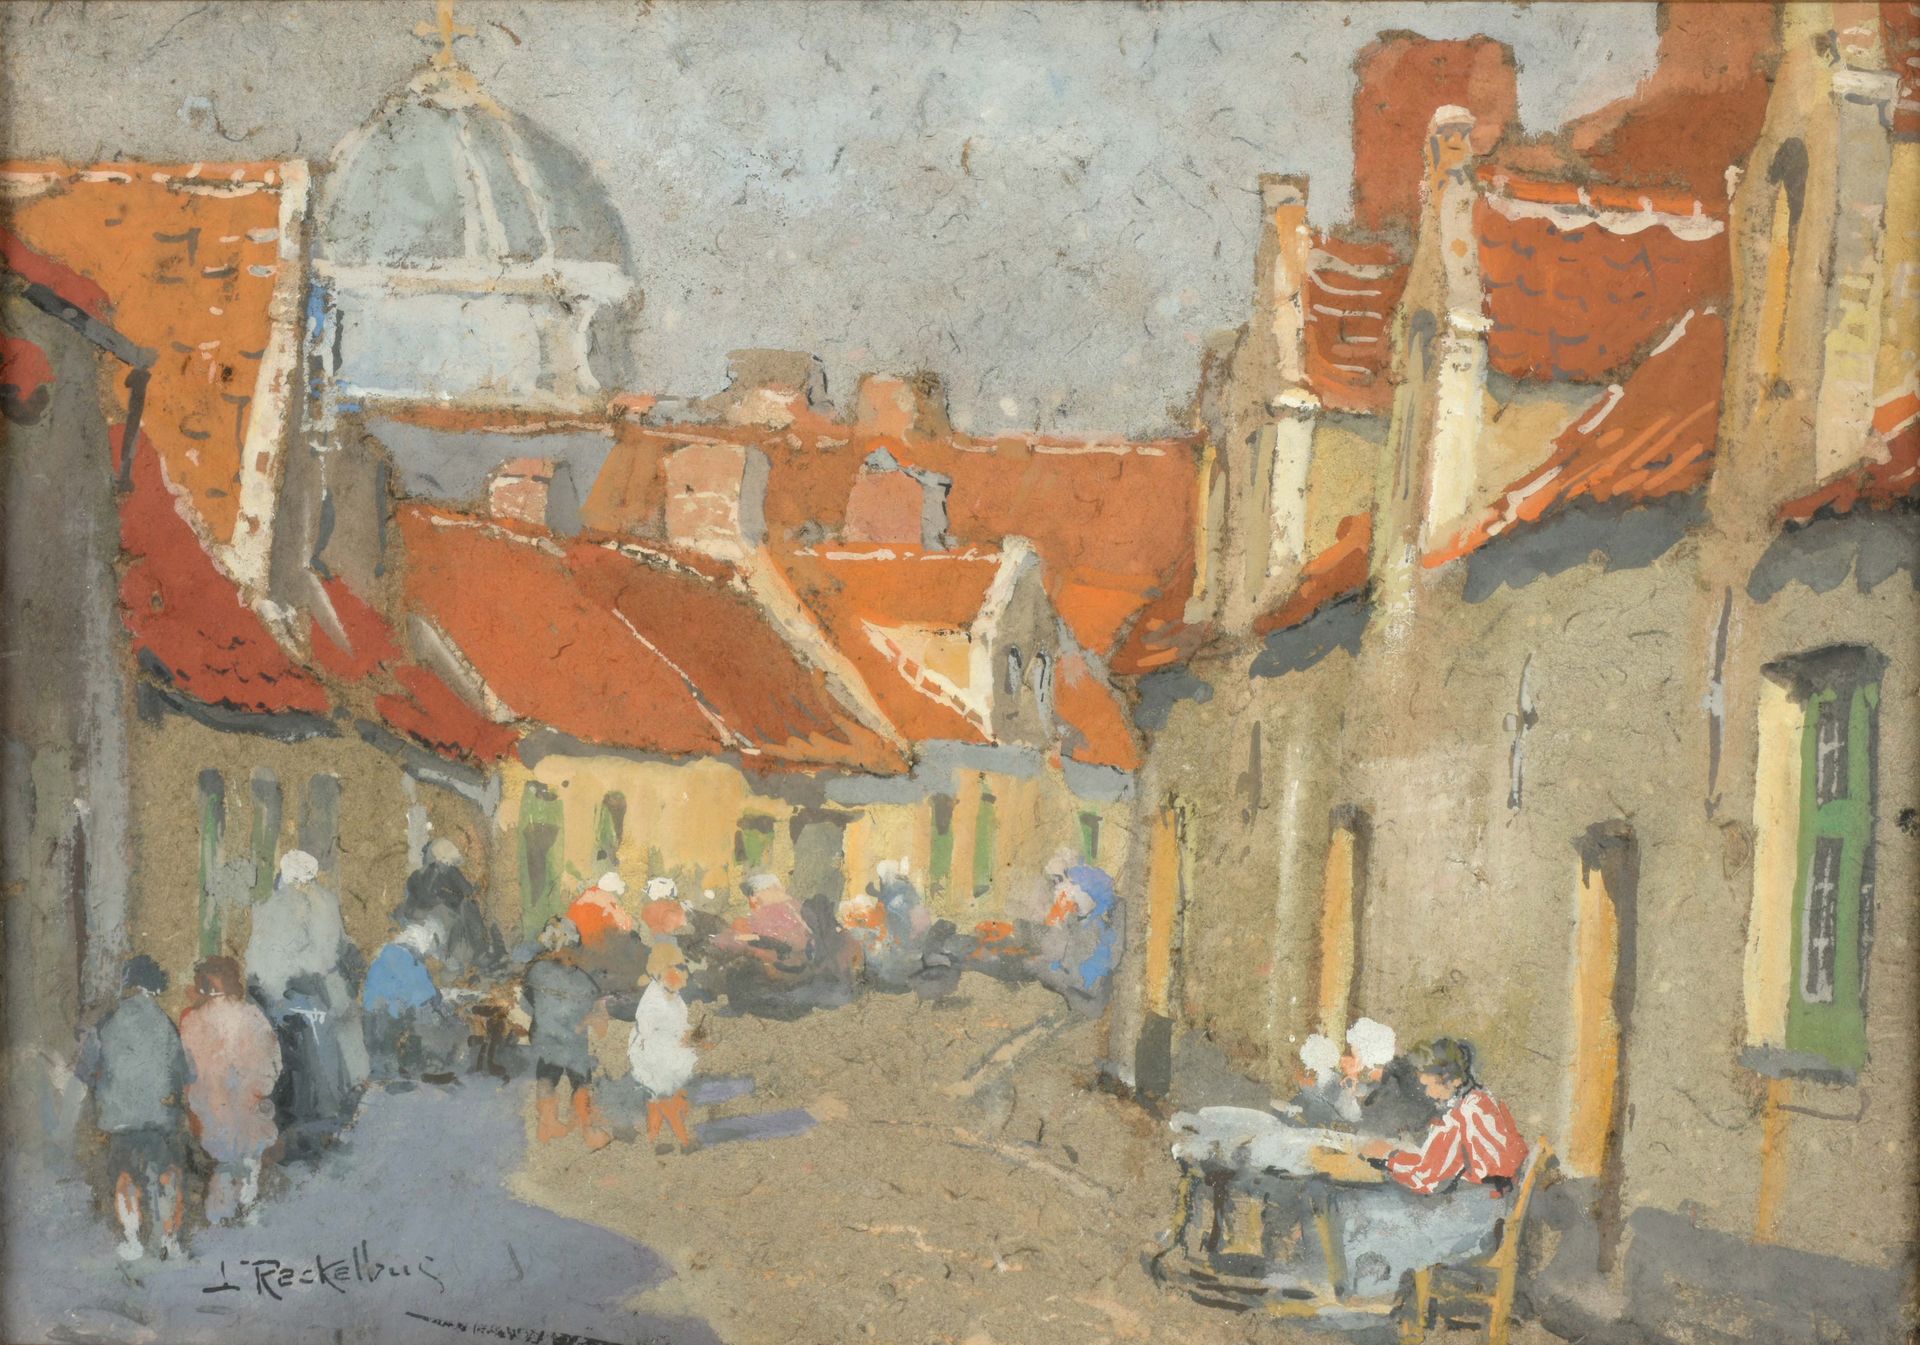 RECKELBUS, Louis (1864-1958) Rolweg in Brugge

Gouache (26 x 37 cm), getekend li&hellip;